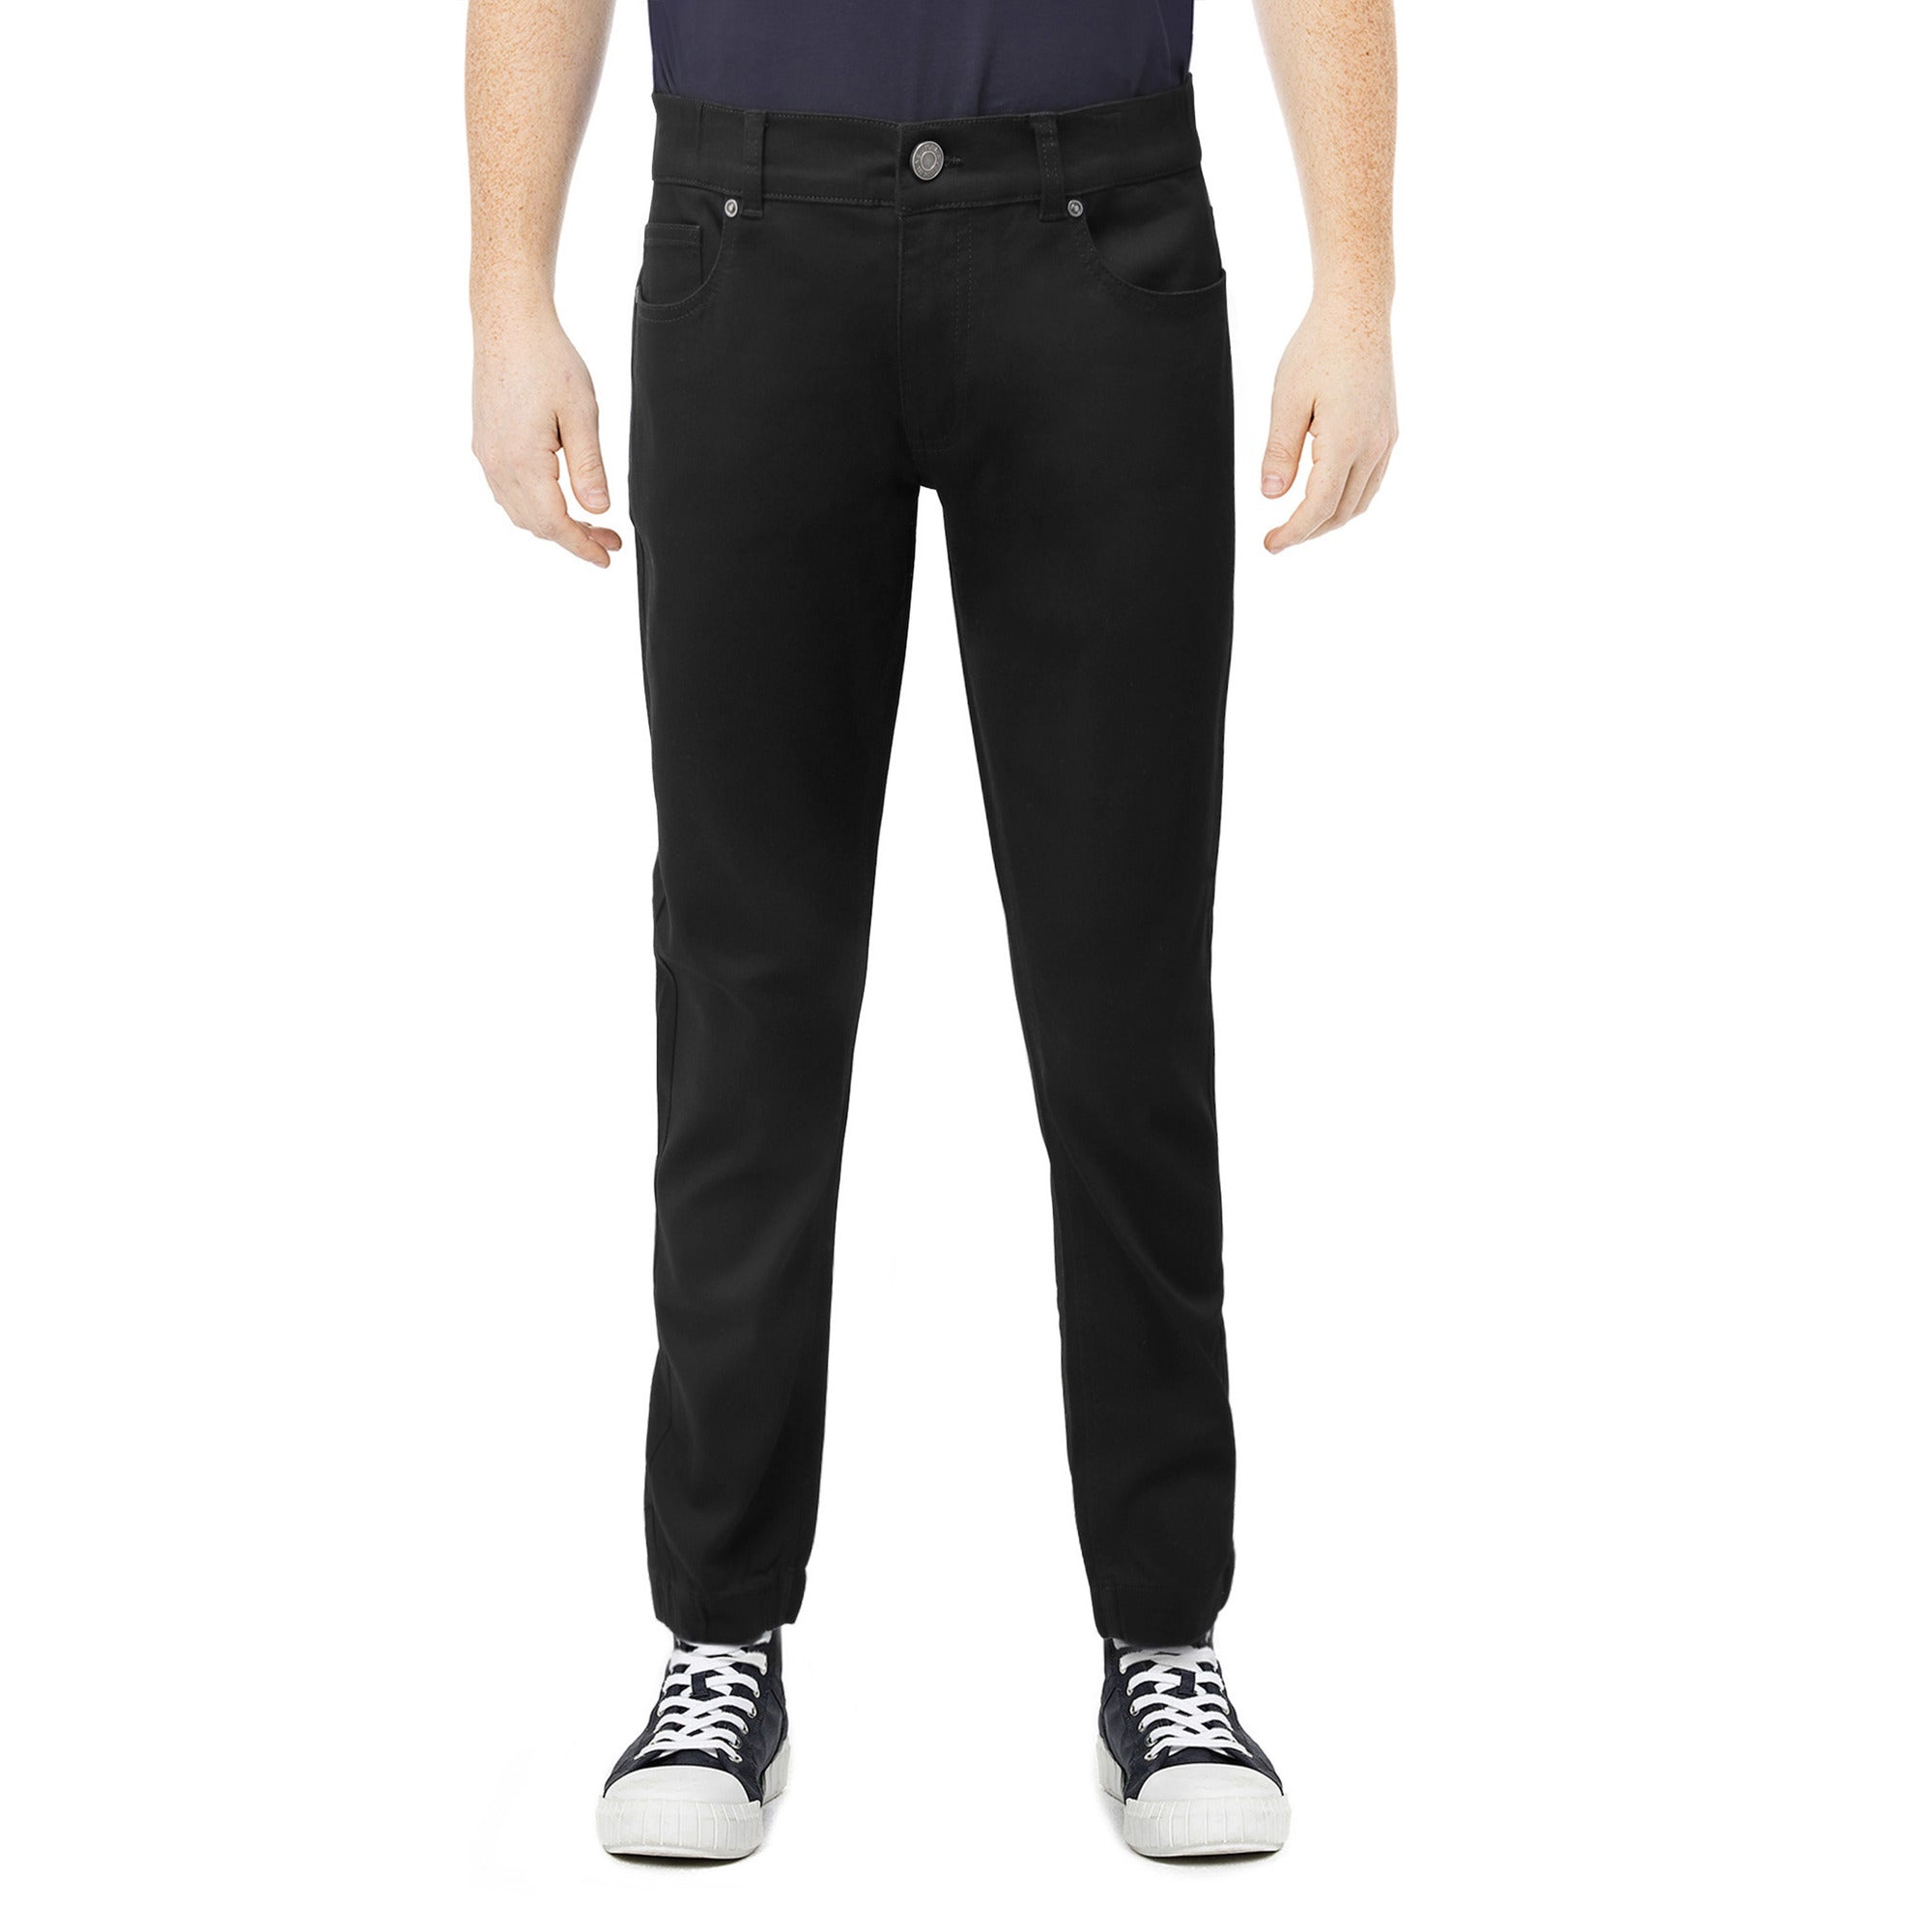 X RAY Jeans | Premium Men's Fashion Clothing - Pants, T-Shirt, Shorts ...